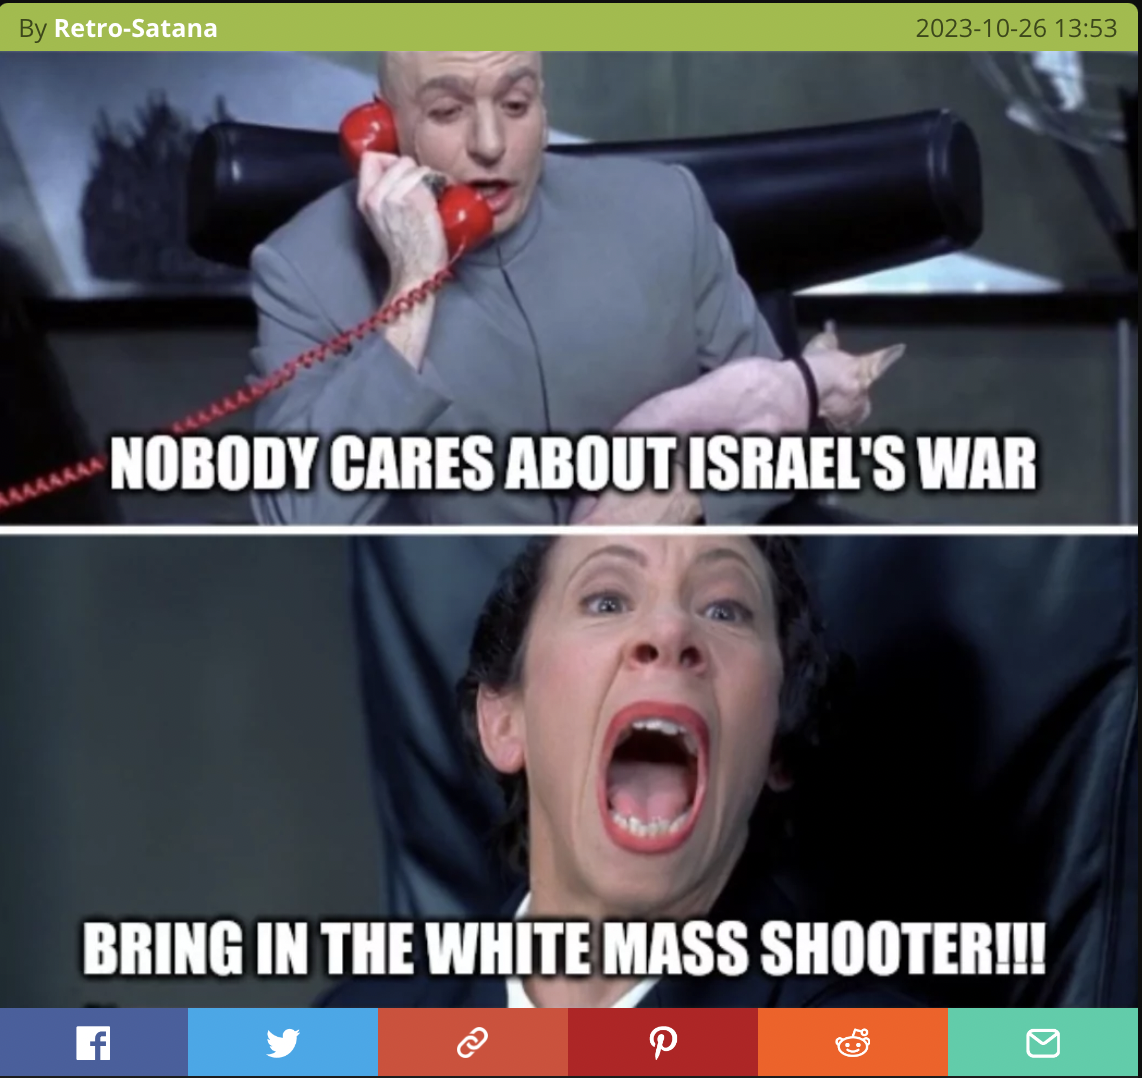 Maine shooting vs. Israel War